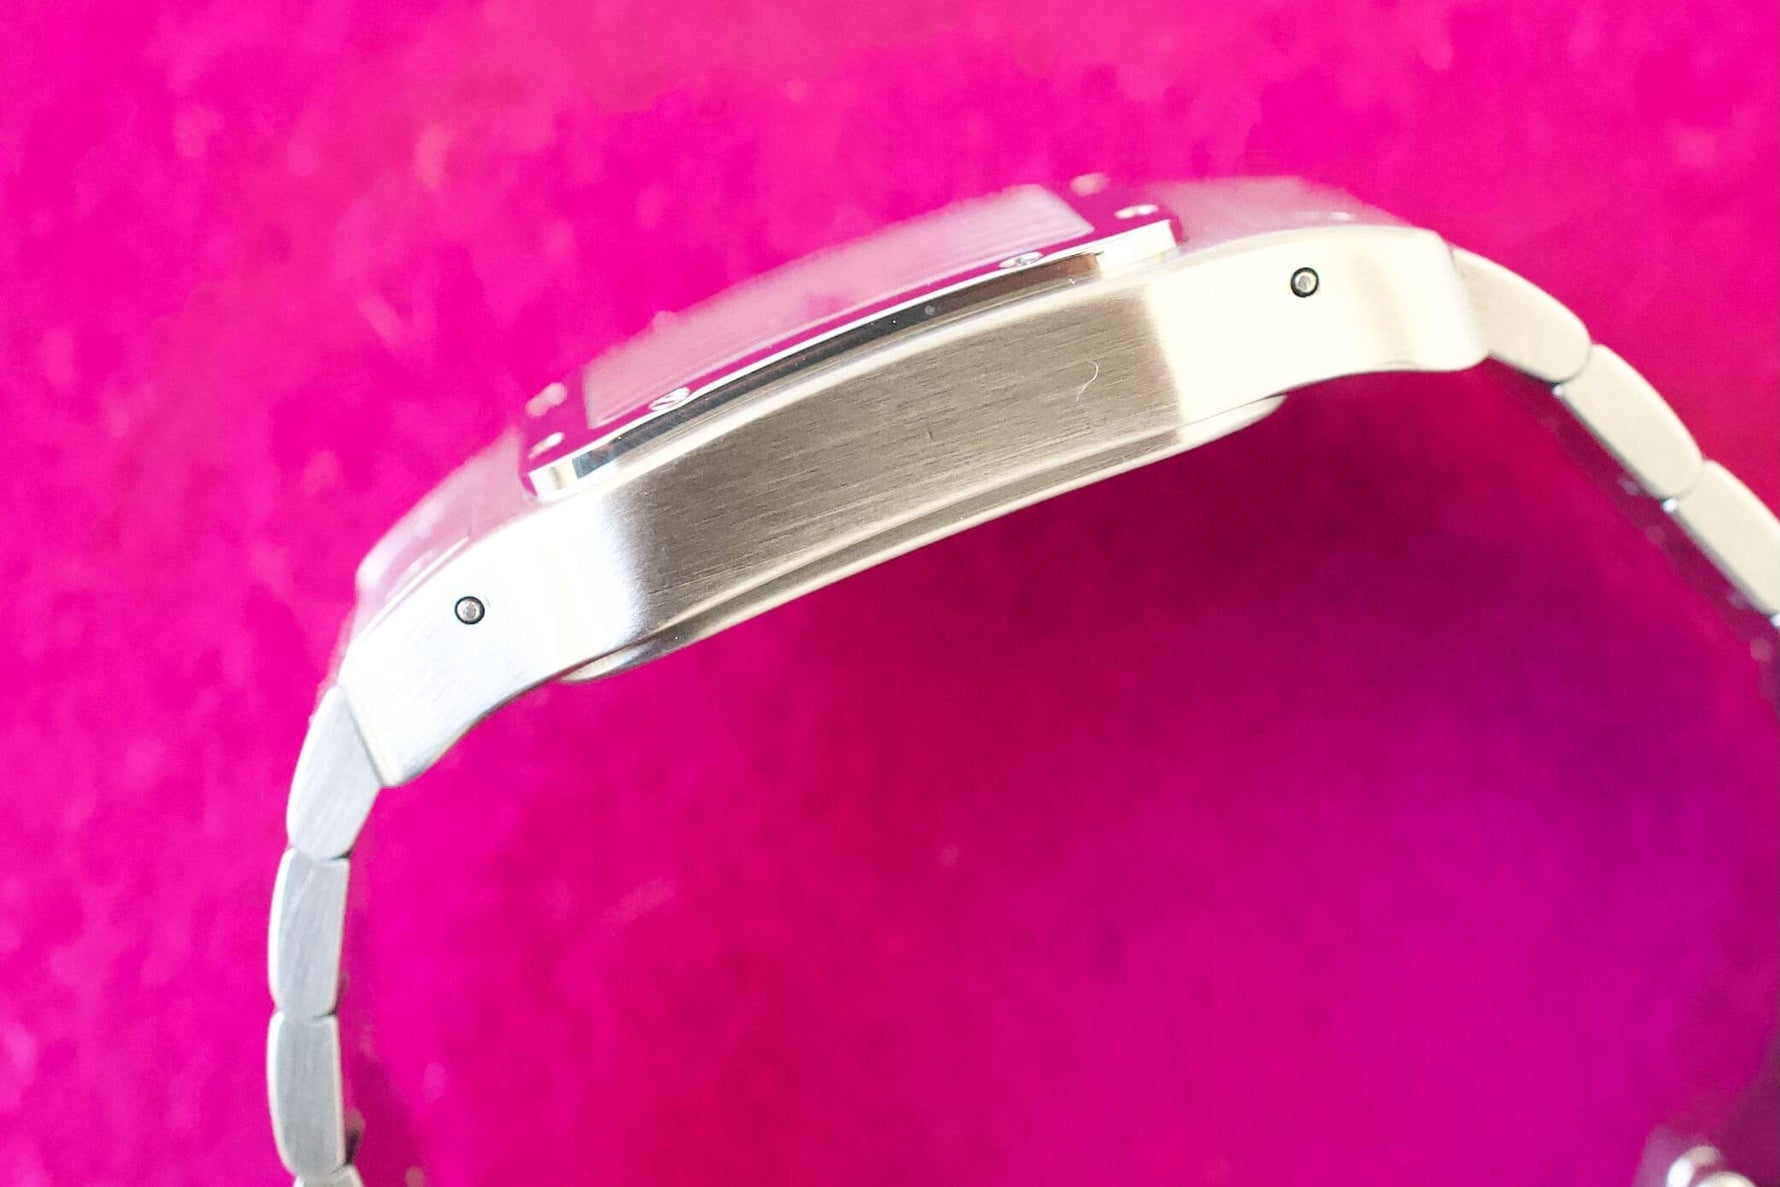 SOLD OUT: Cartier Santos Galbee XL 2823 Steel Mens Automatic Watch steel bracelet 45 x 32 mm wears like 38mm - WearingTime Luxury Watches